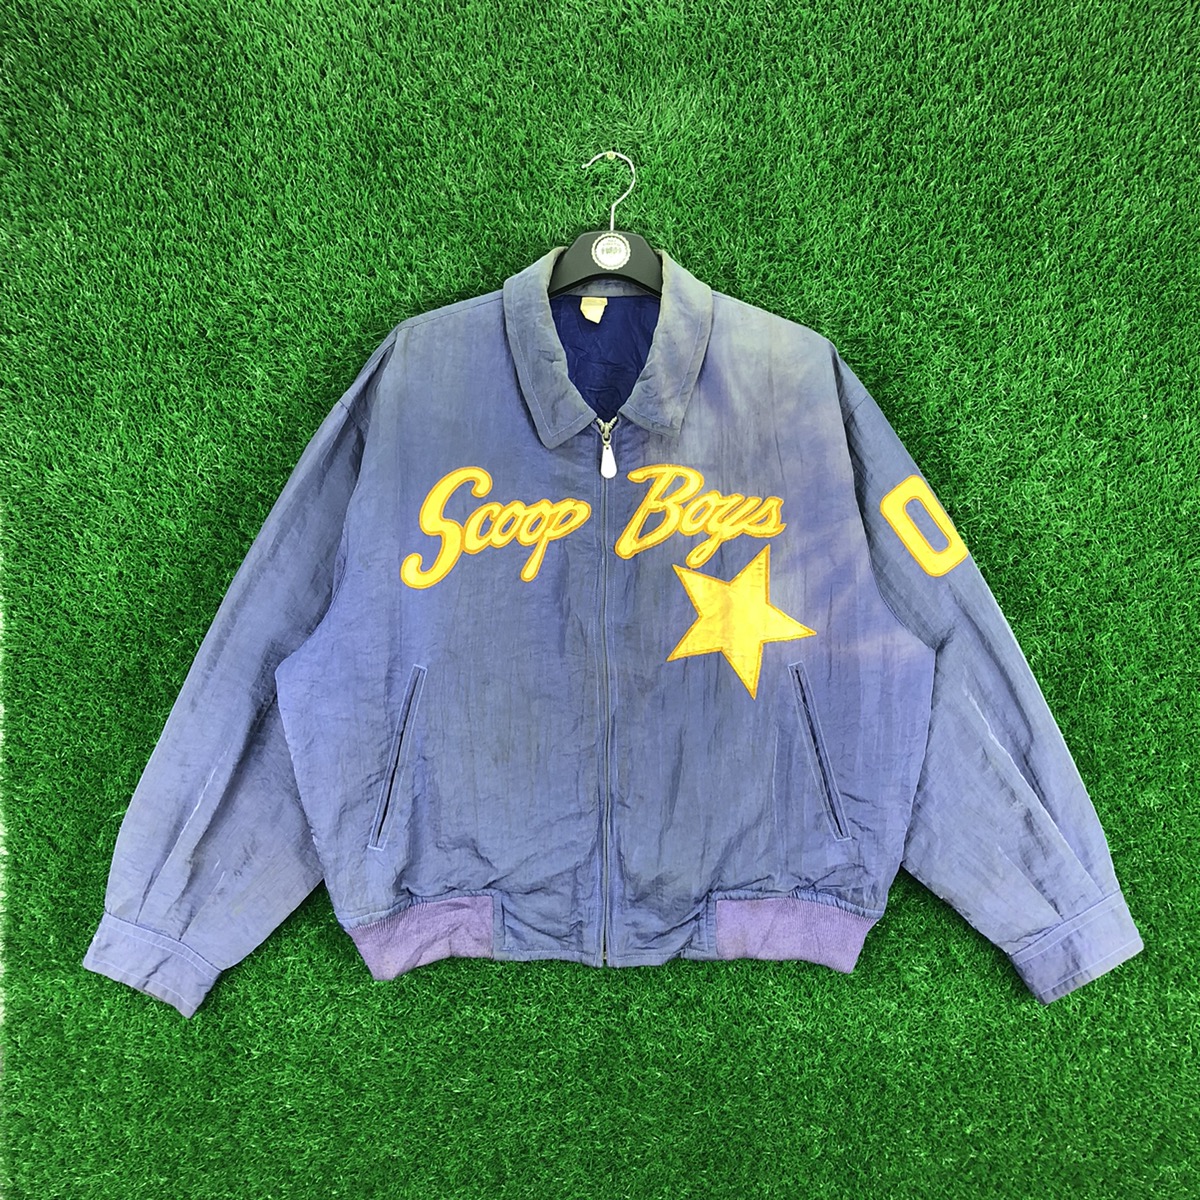 Vintage - Vintage 80's Scoop Boys Tokyo Japan Harrington Nylon Jacket